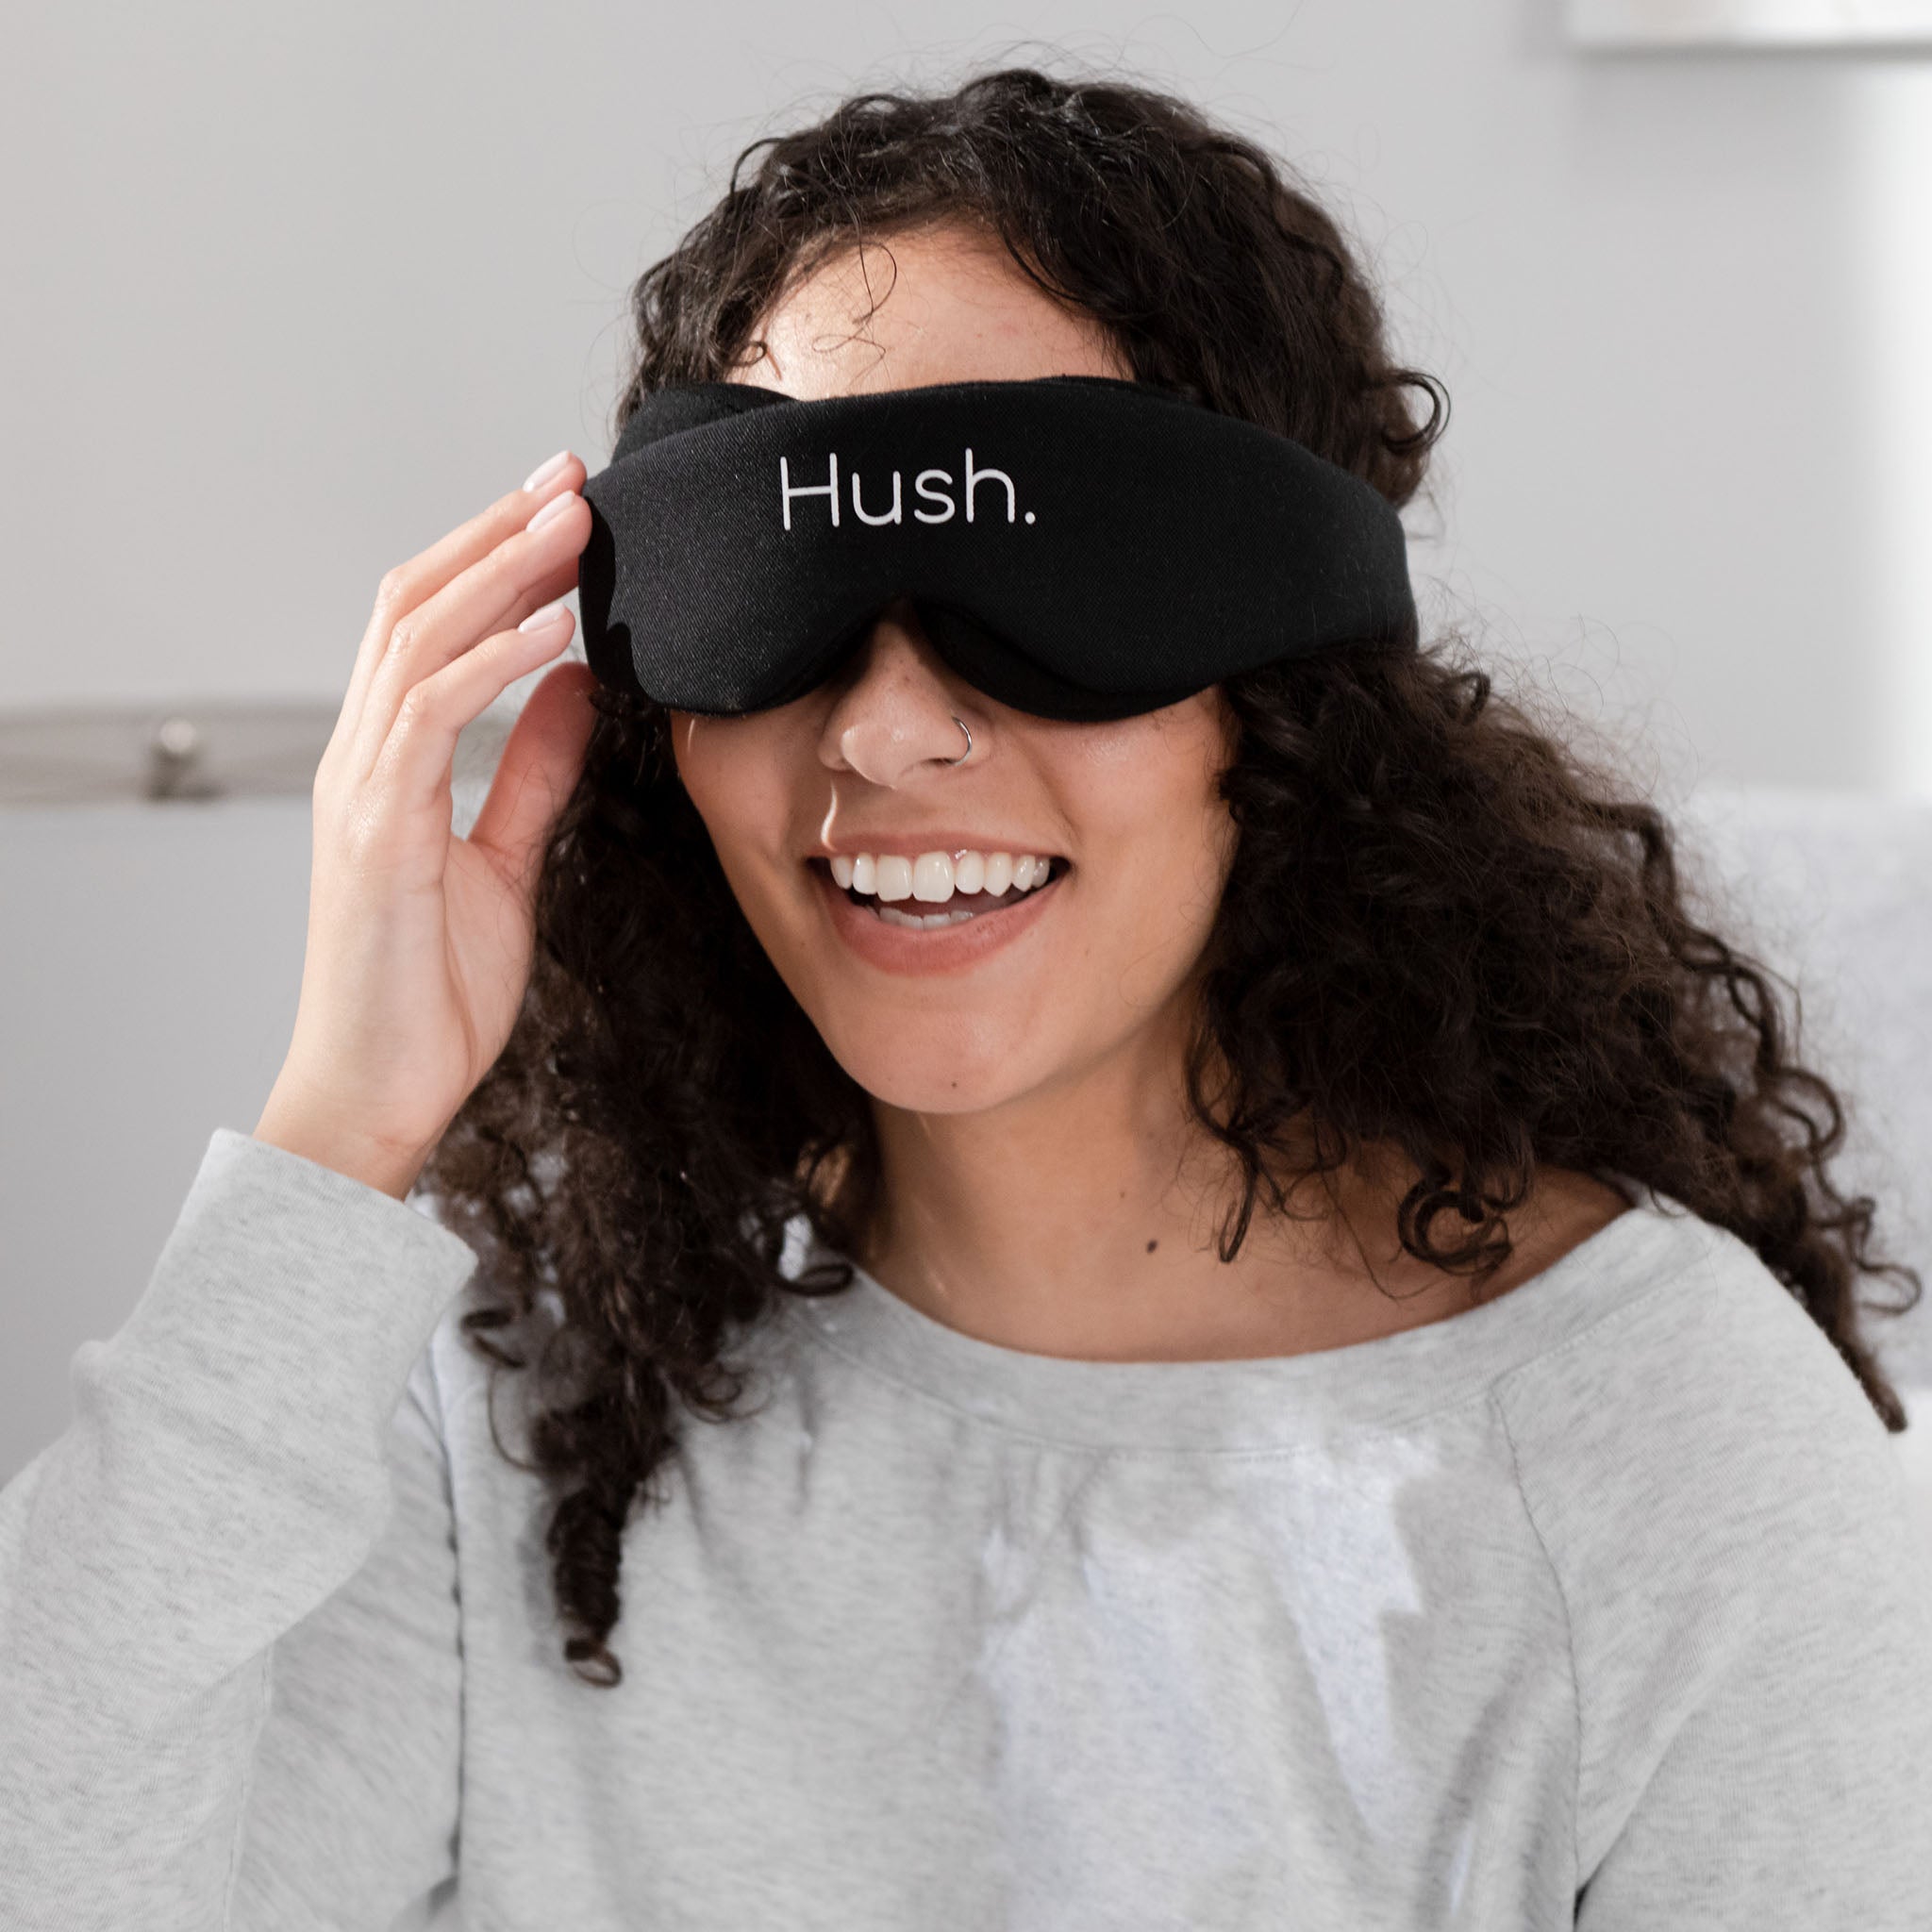 The Hush Blackout Eyemask